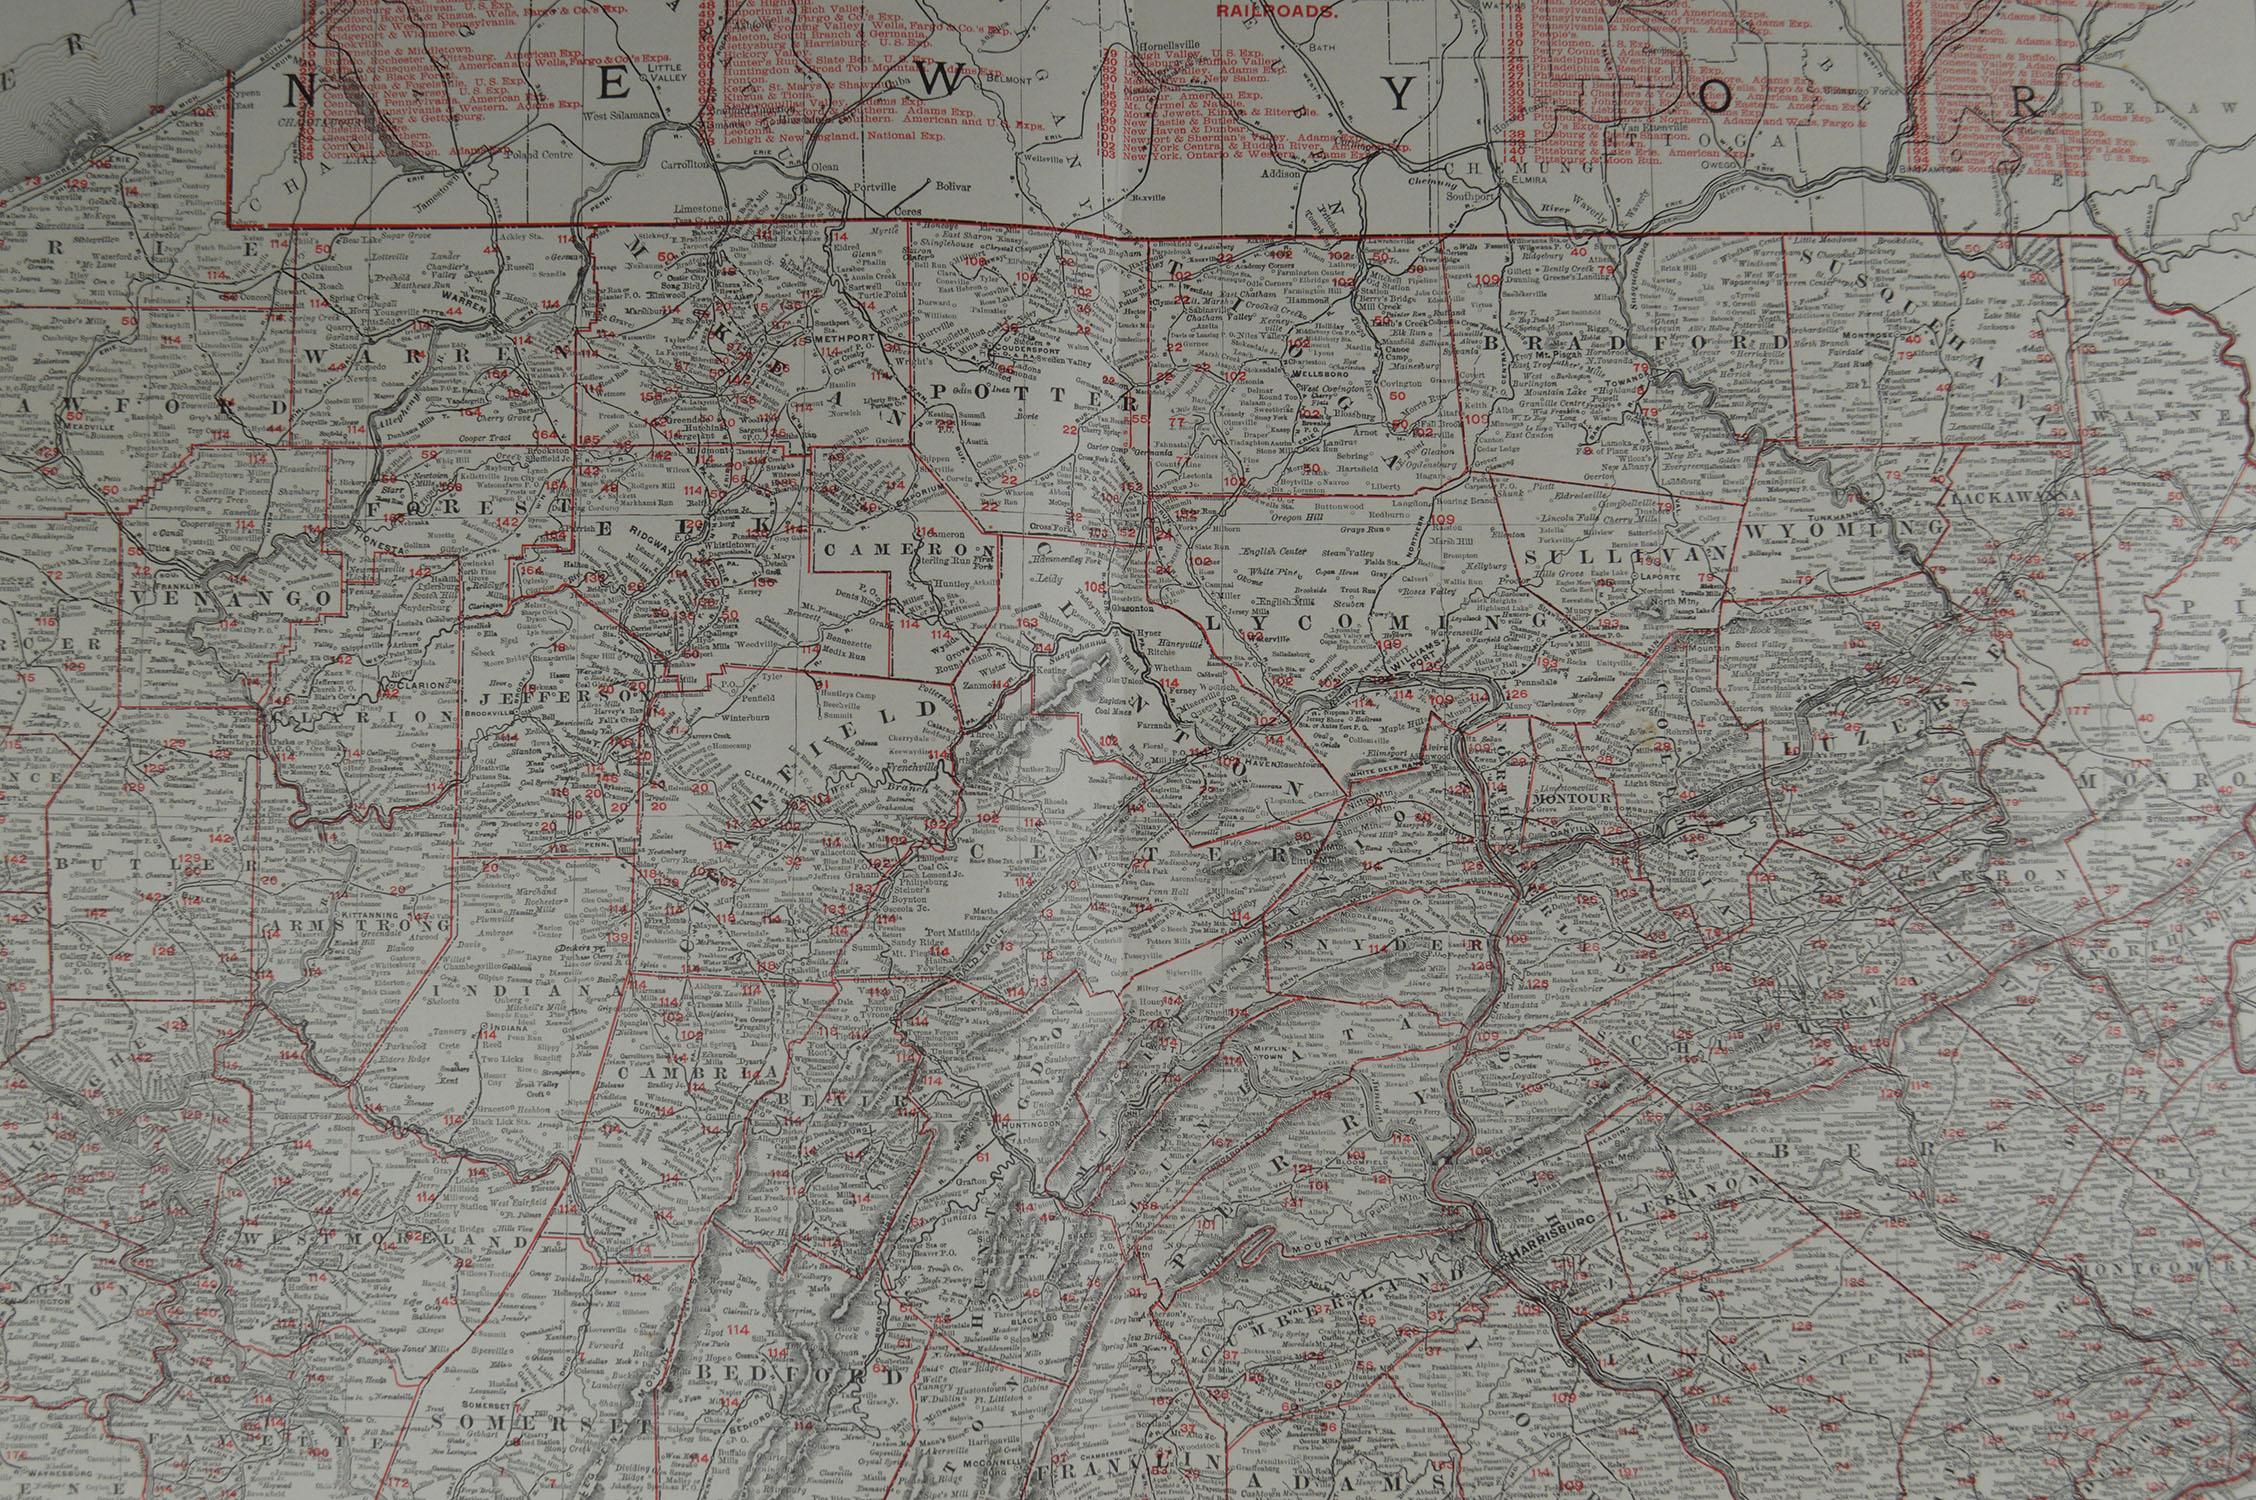 Edwardian Large Original Antique Map of Pennsylvania by Rand McNally, circa 1900